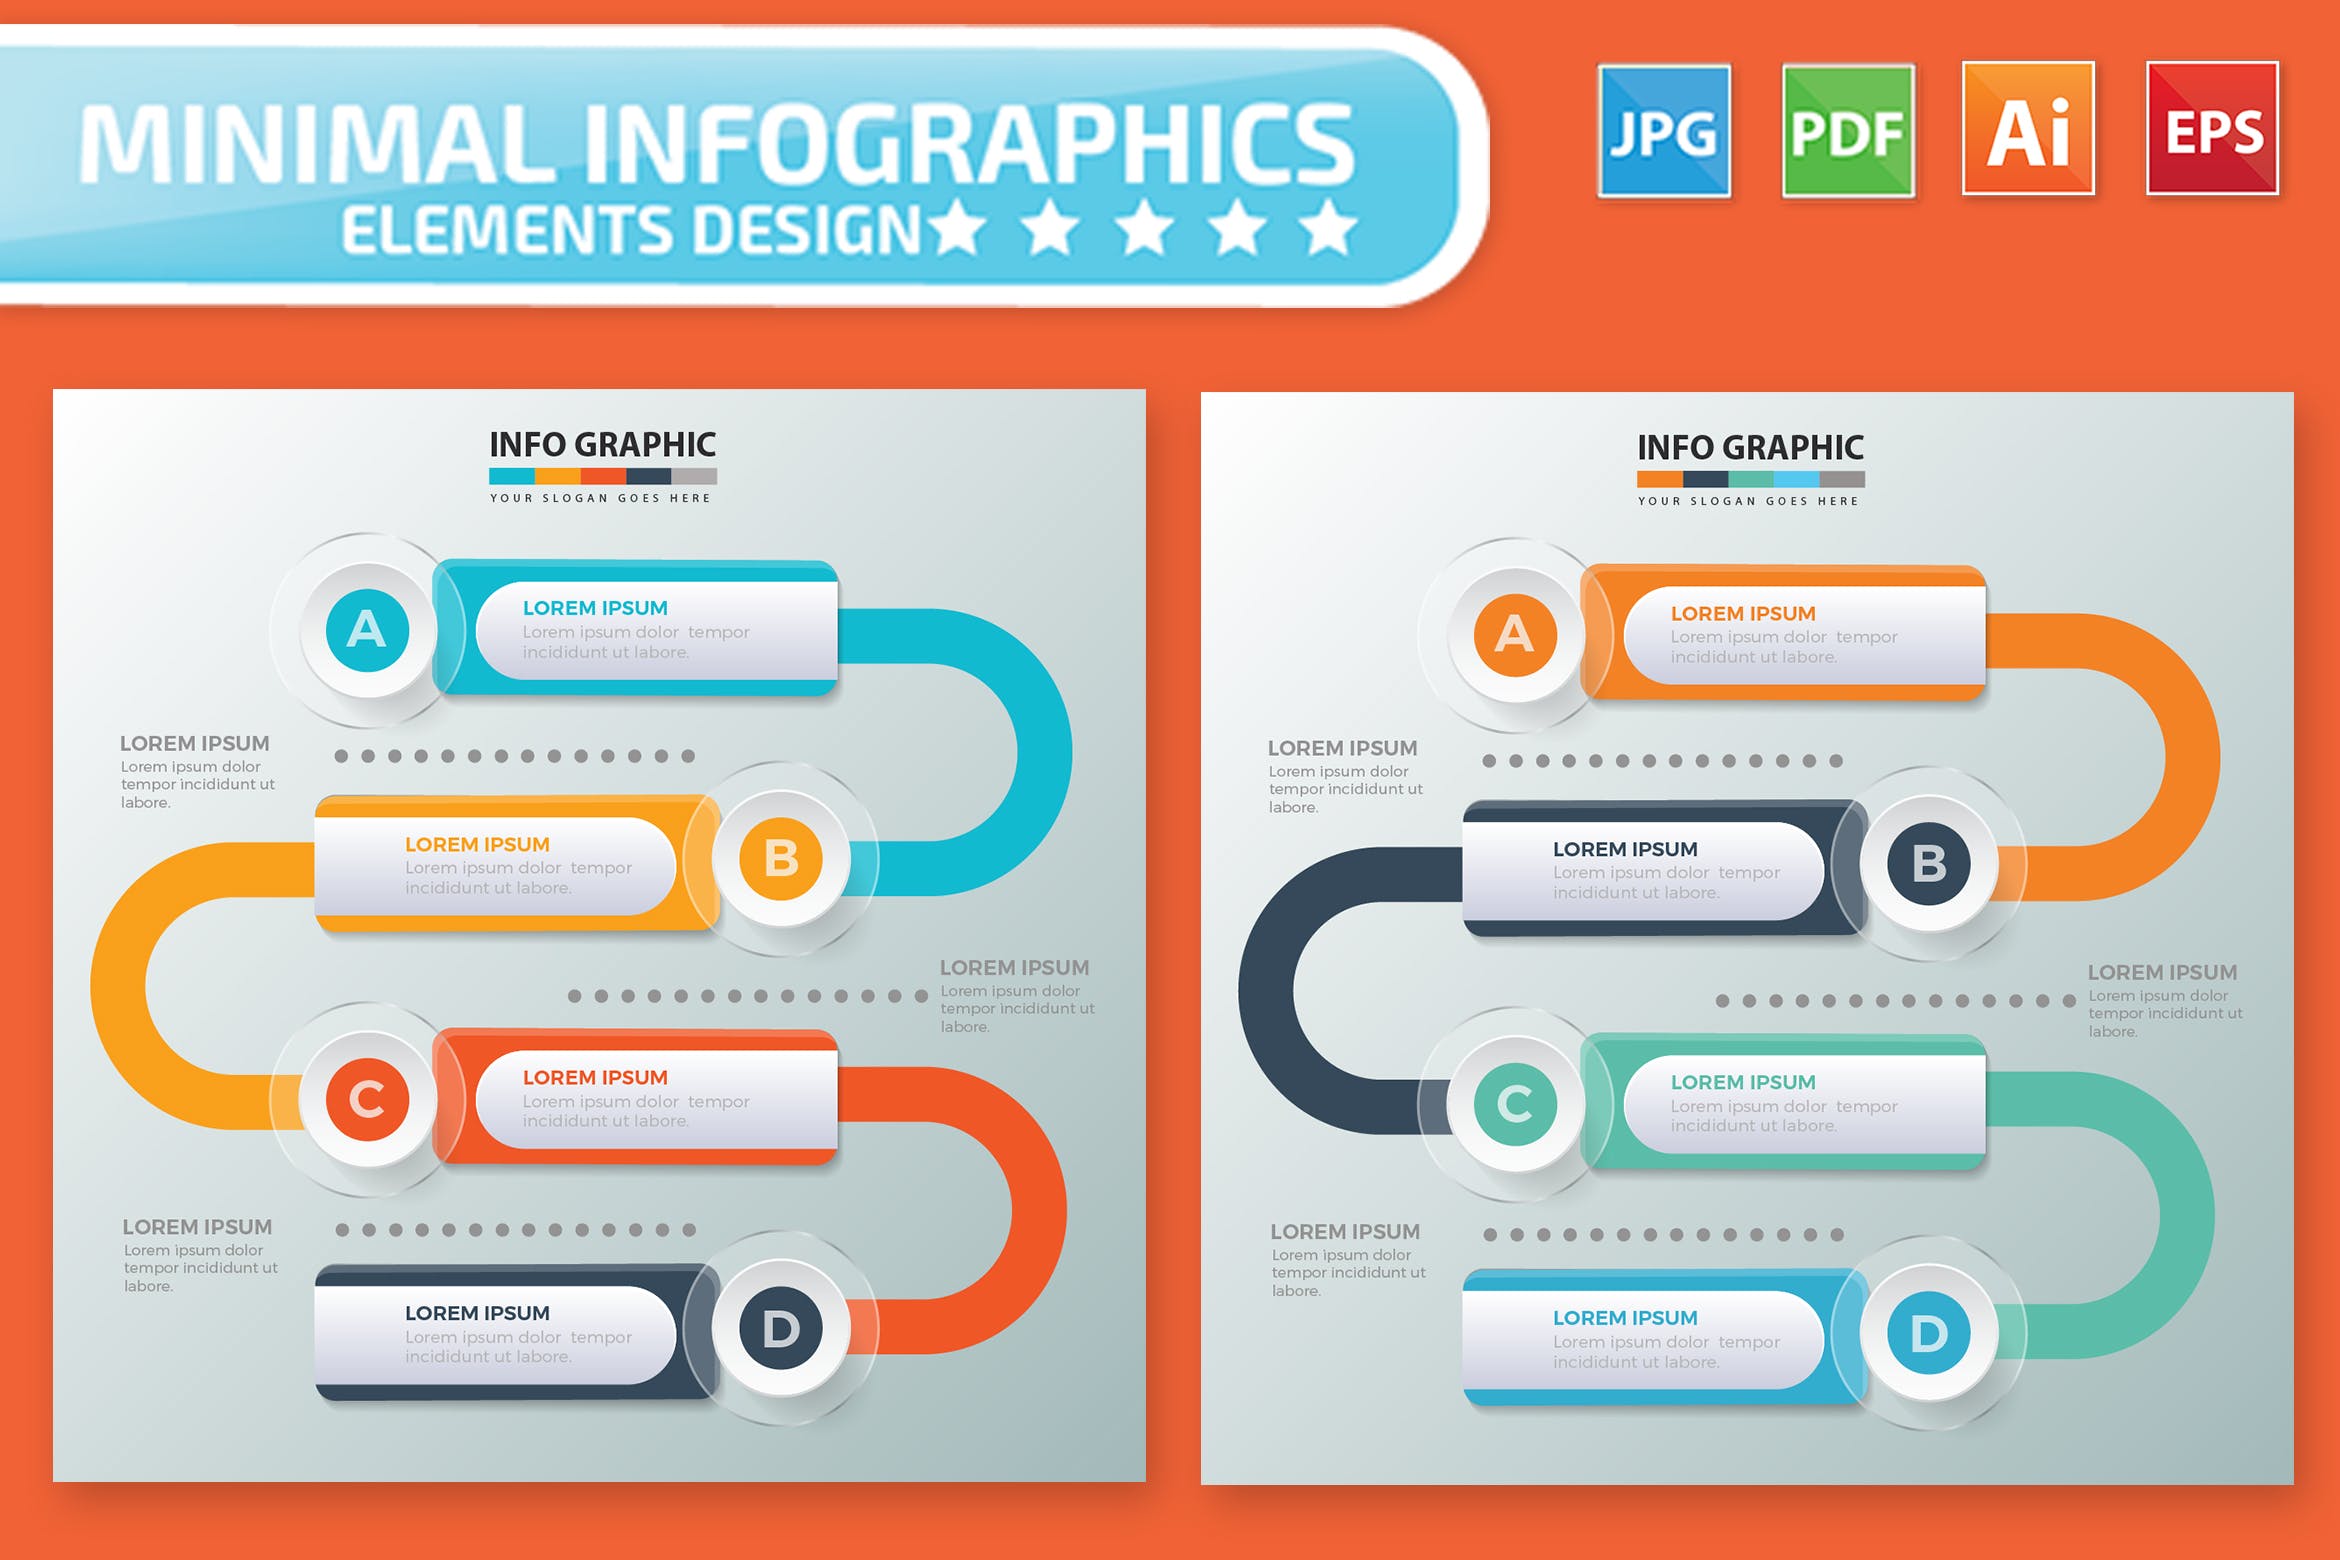 PPT幻灯片设计管道信息图表设计素材 Infographic Elements插图